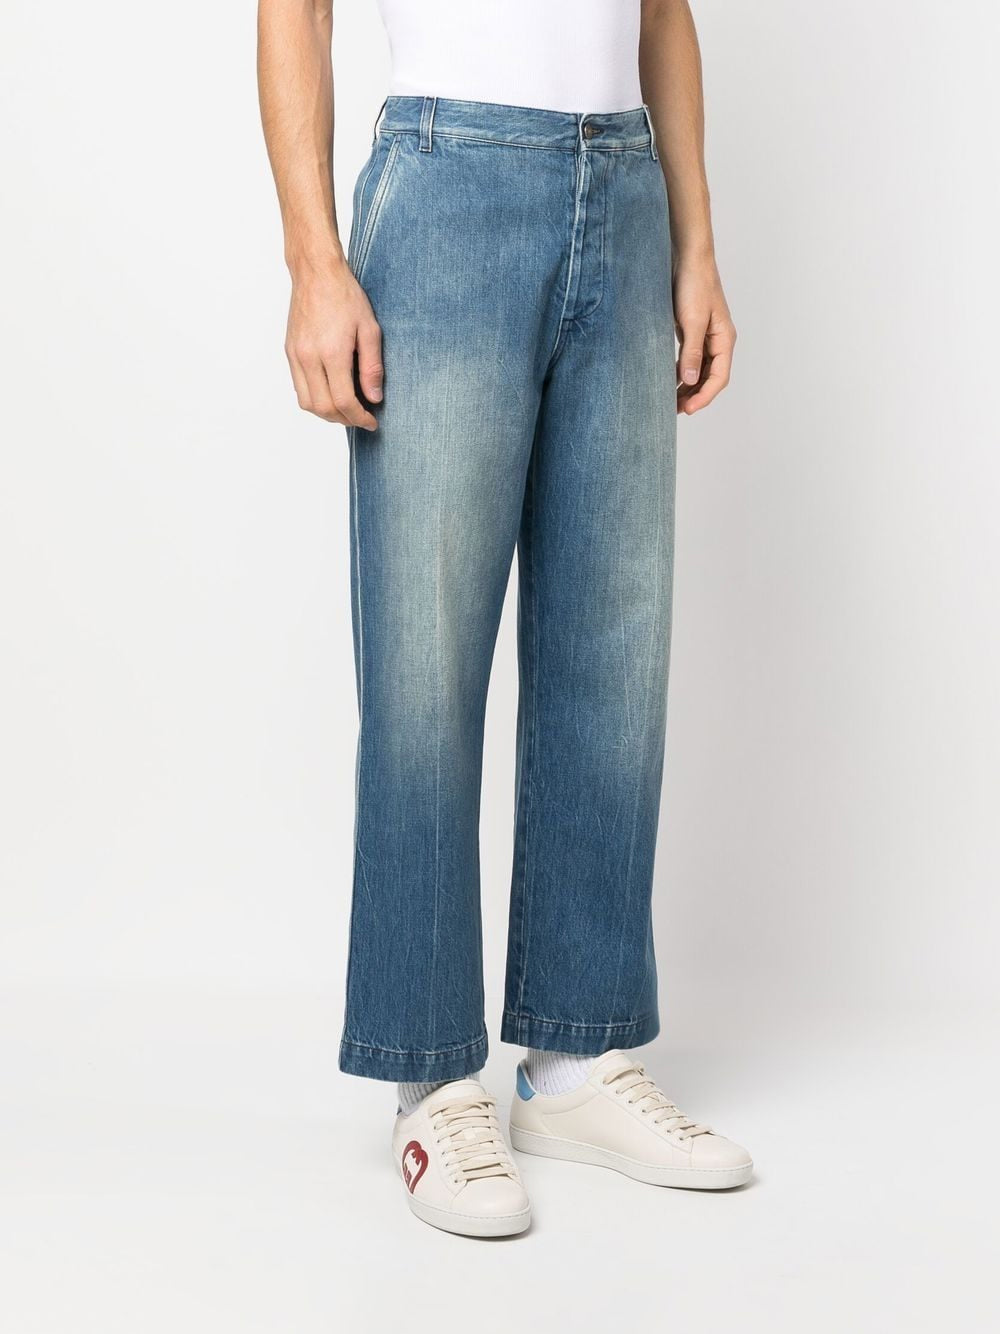 Straight-leg cut jeans